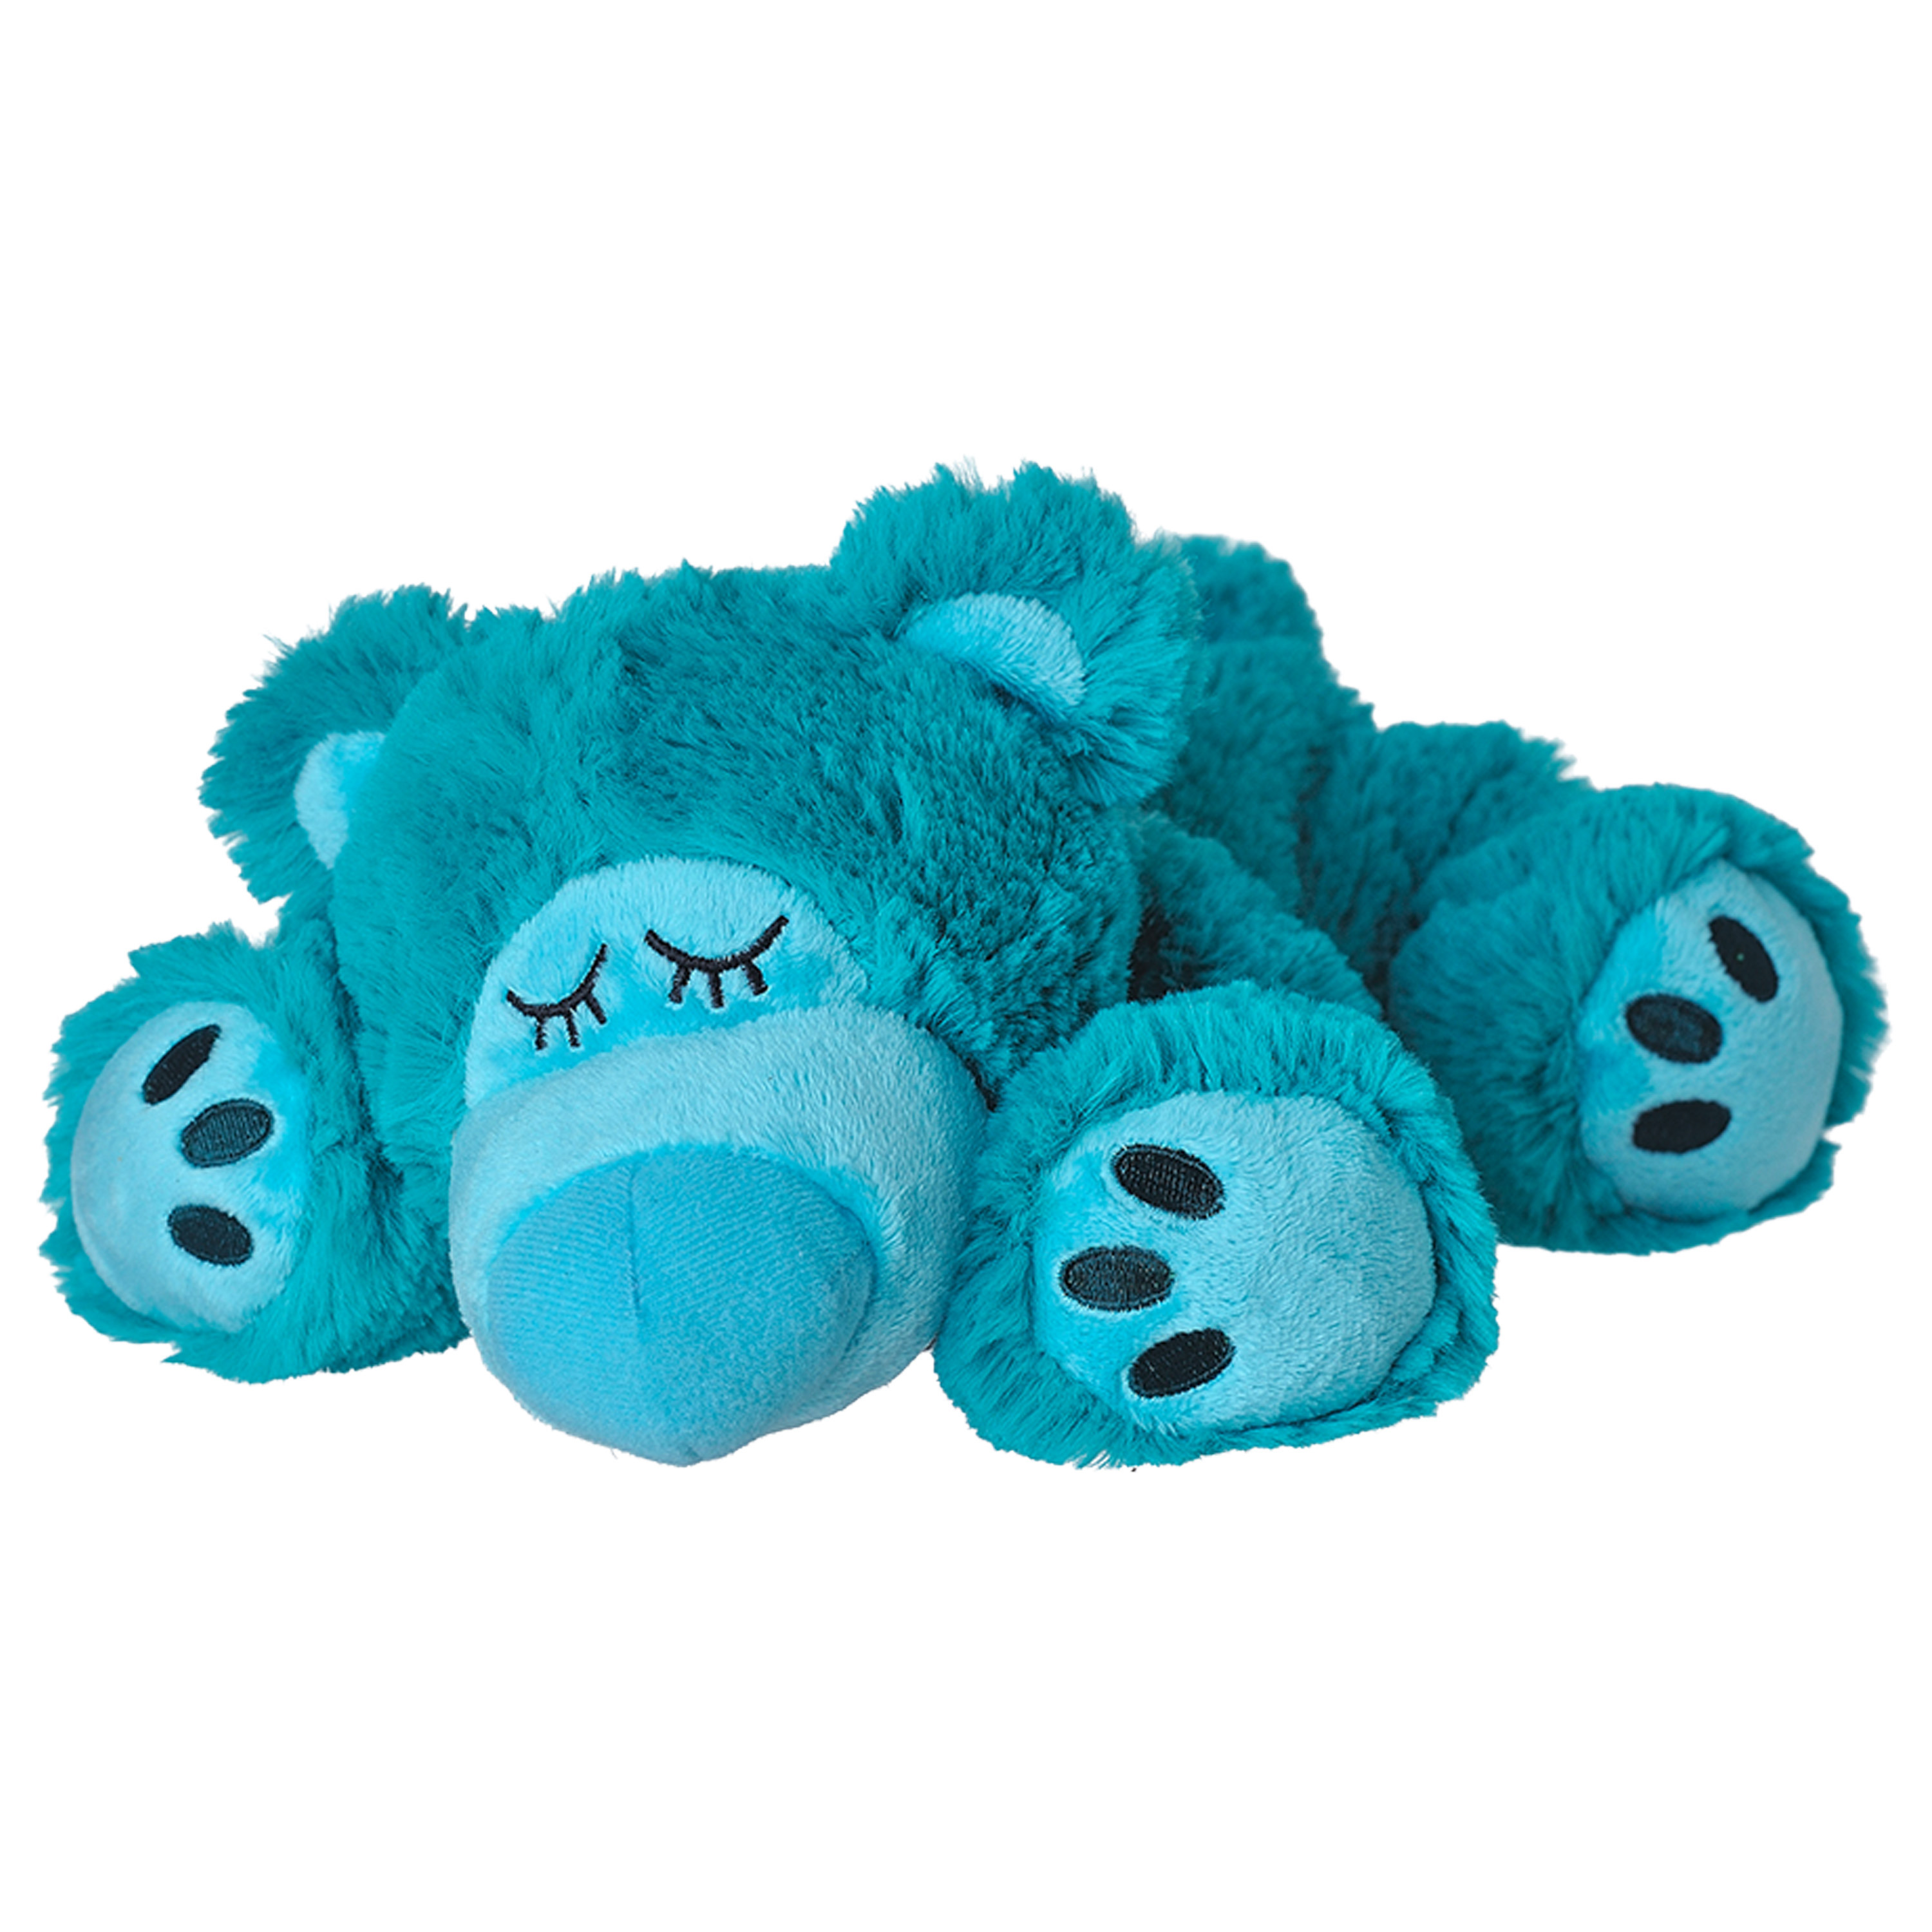 Warmte-magnetron opwarm knuffel Teddybeer turquoise 32 cm pittenzak